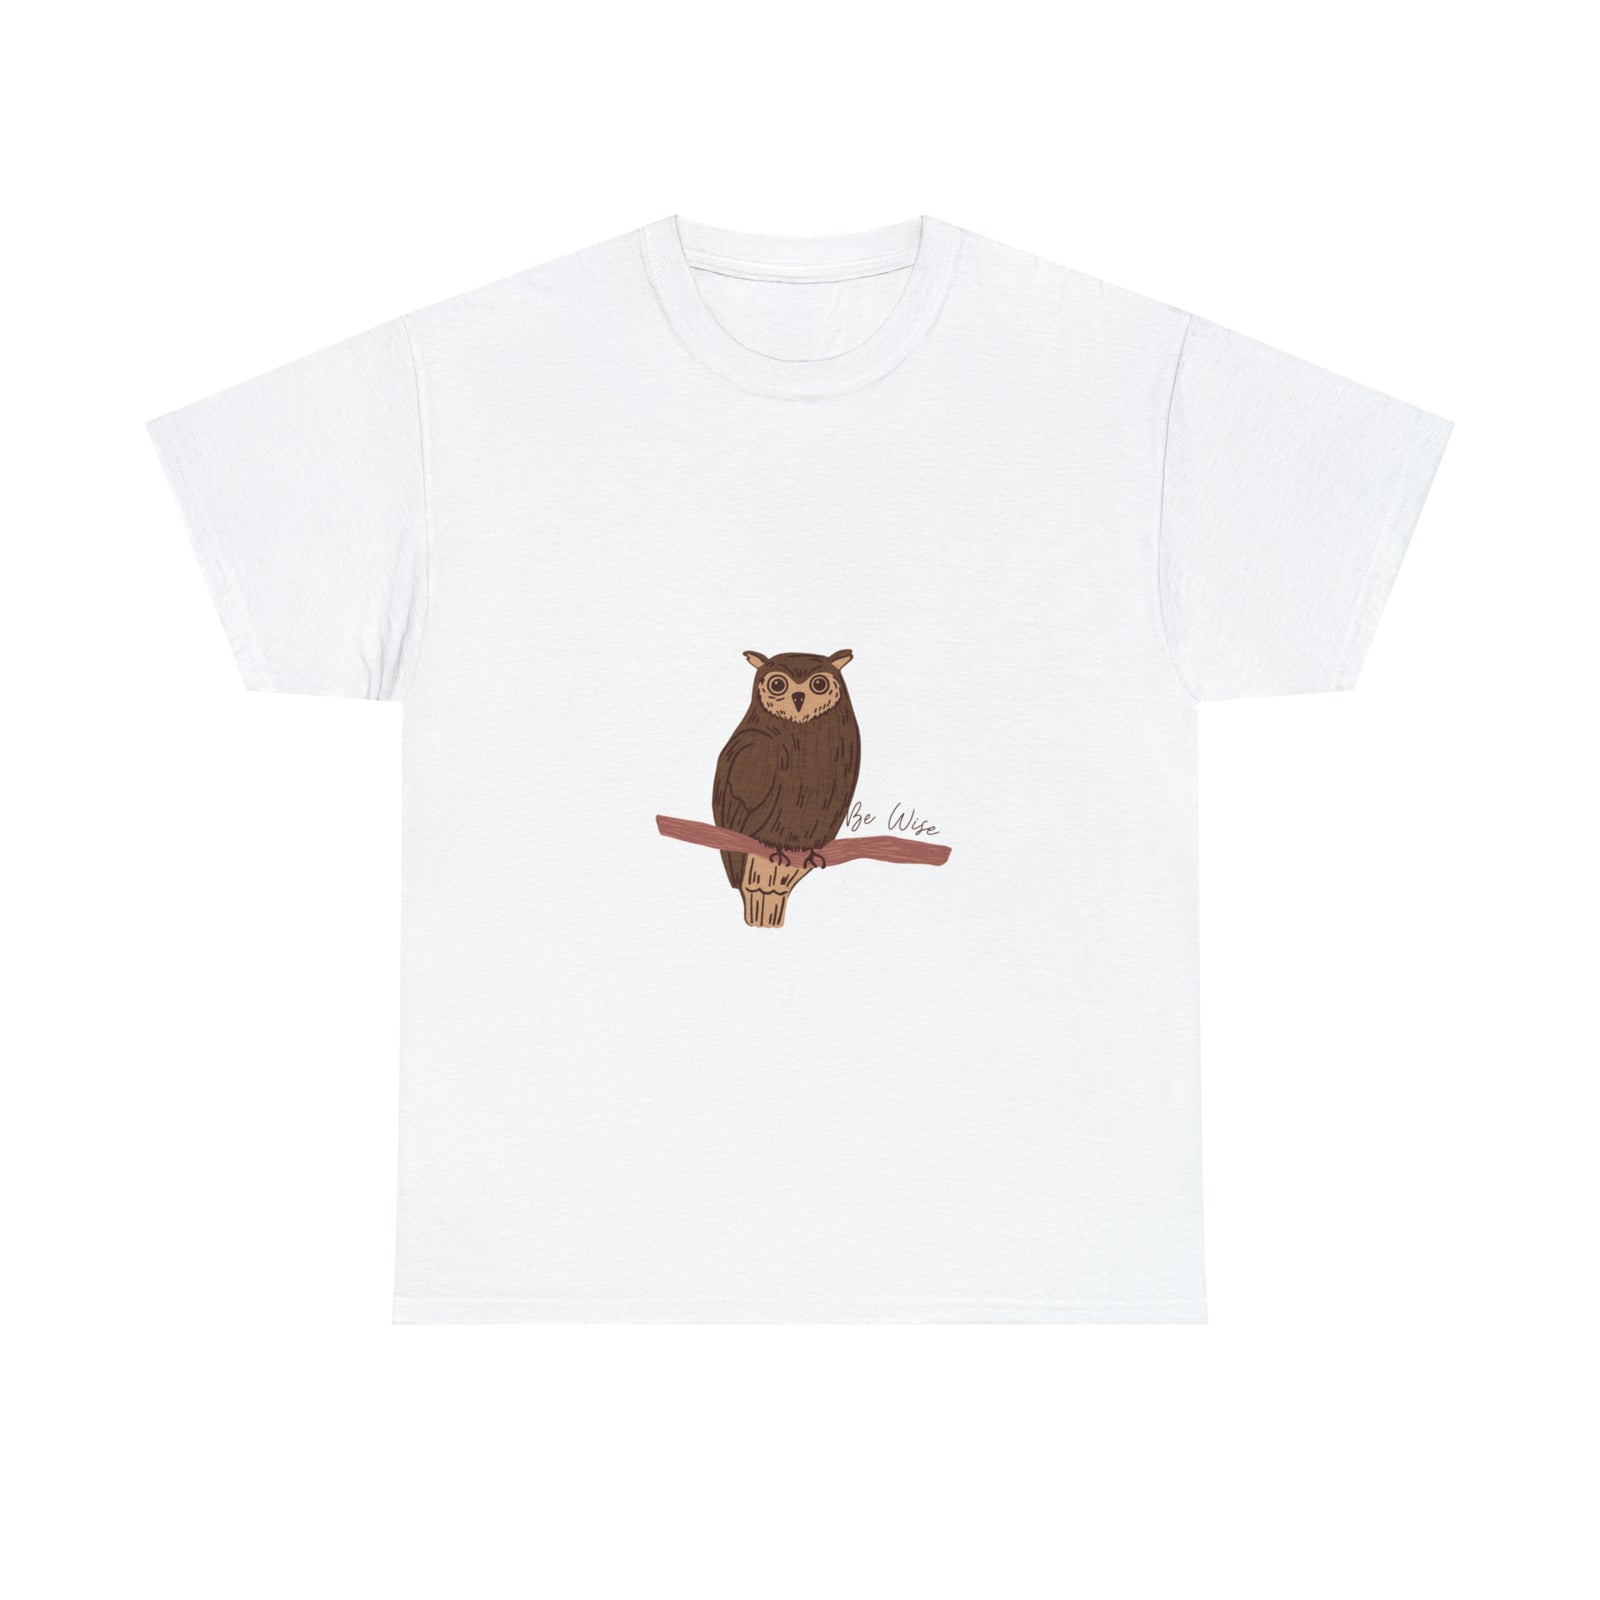 Be Wise Owl Unisex Cotton Tee